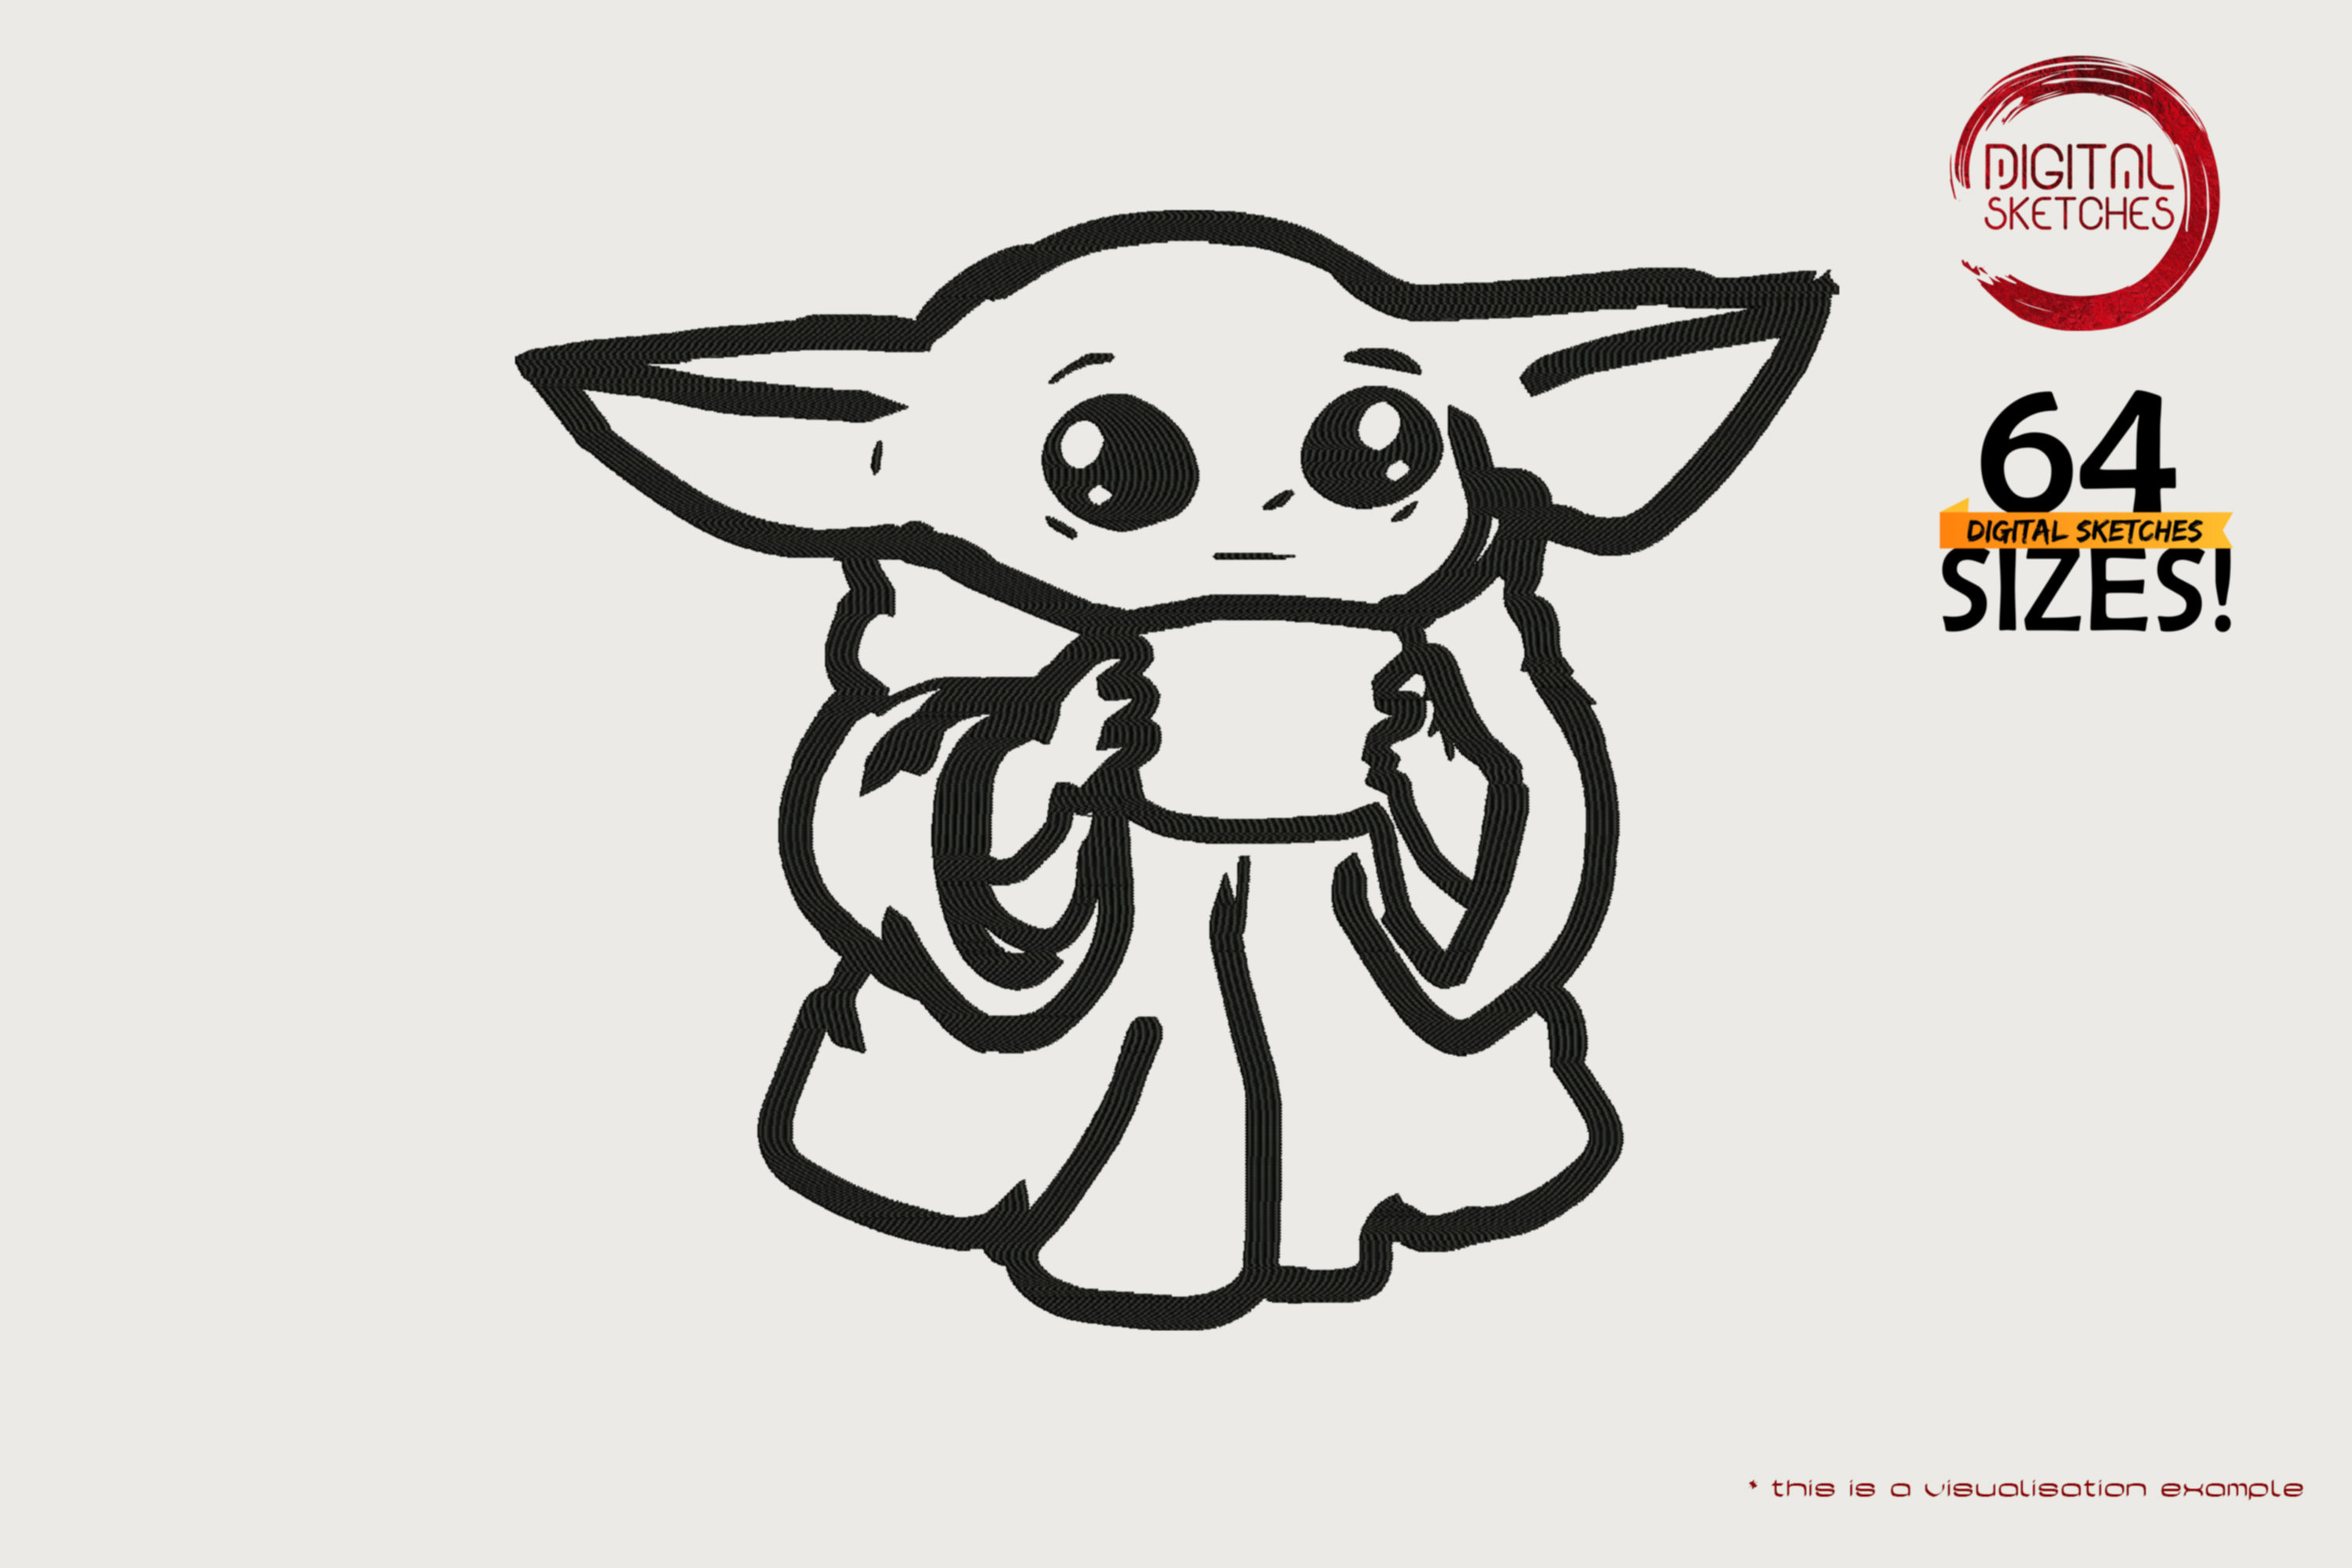 Tribute To Fictional Character Grogu aka Baby Yoda (Outline Drawing)